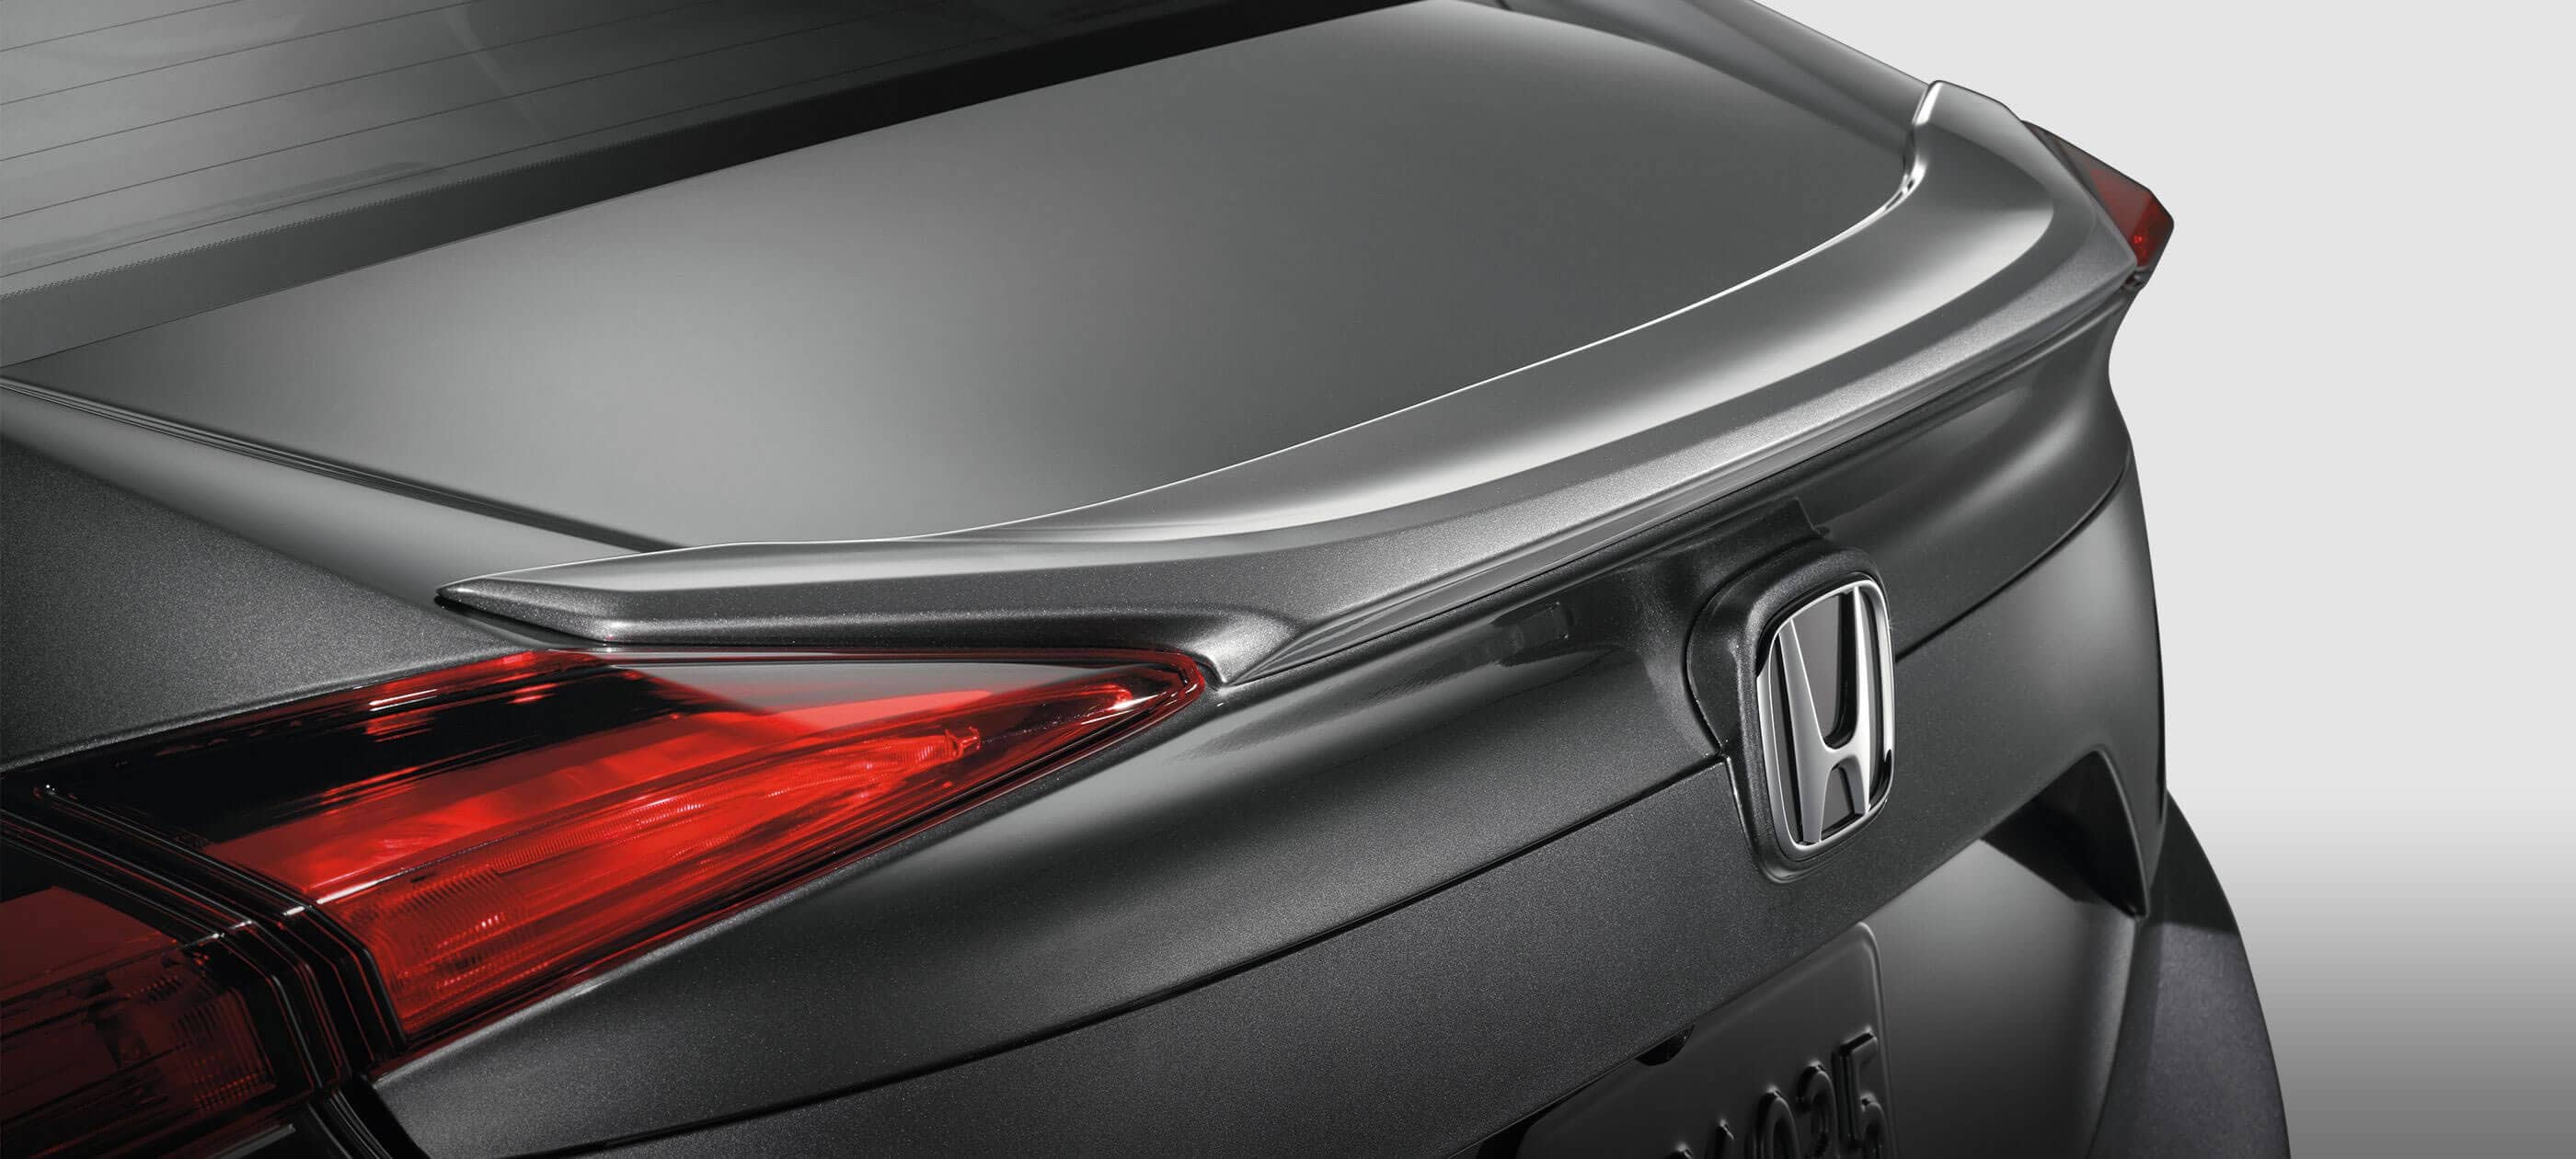 Honda Civic Sedan Decklid Spoiler Denver